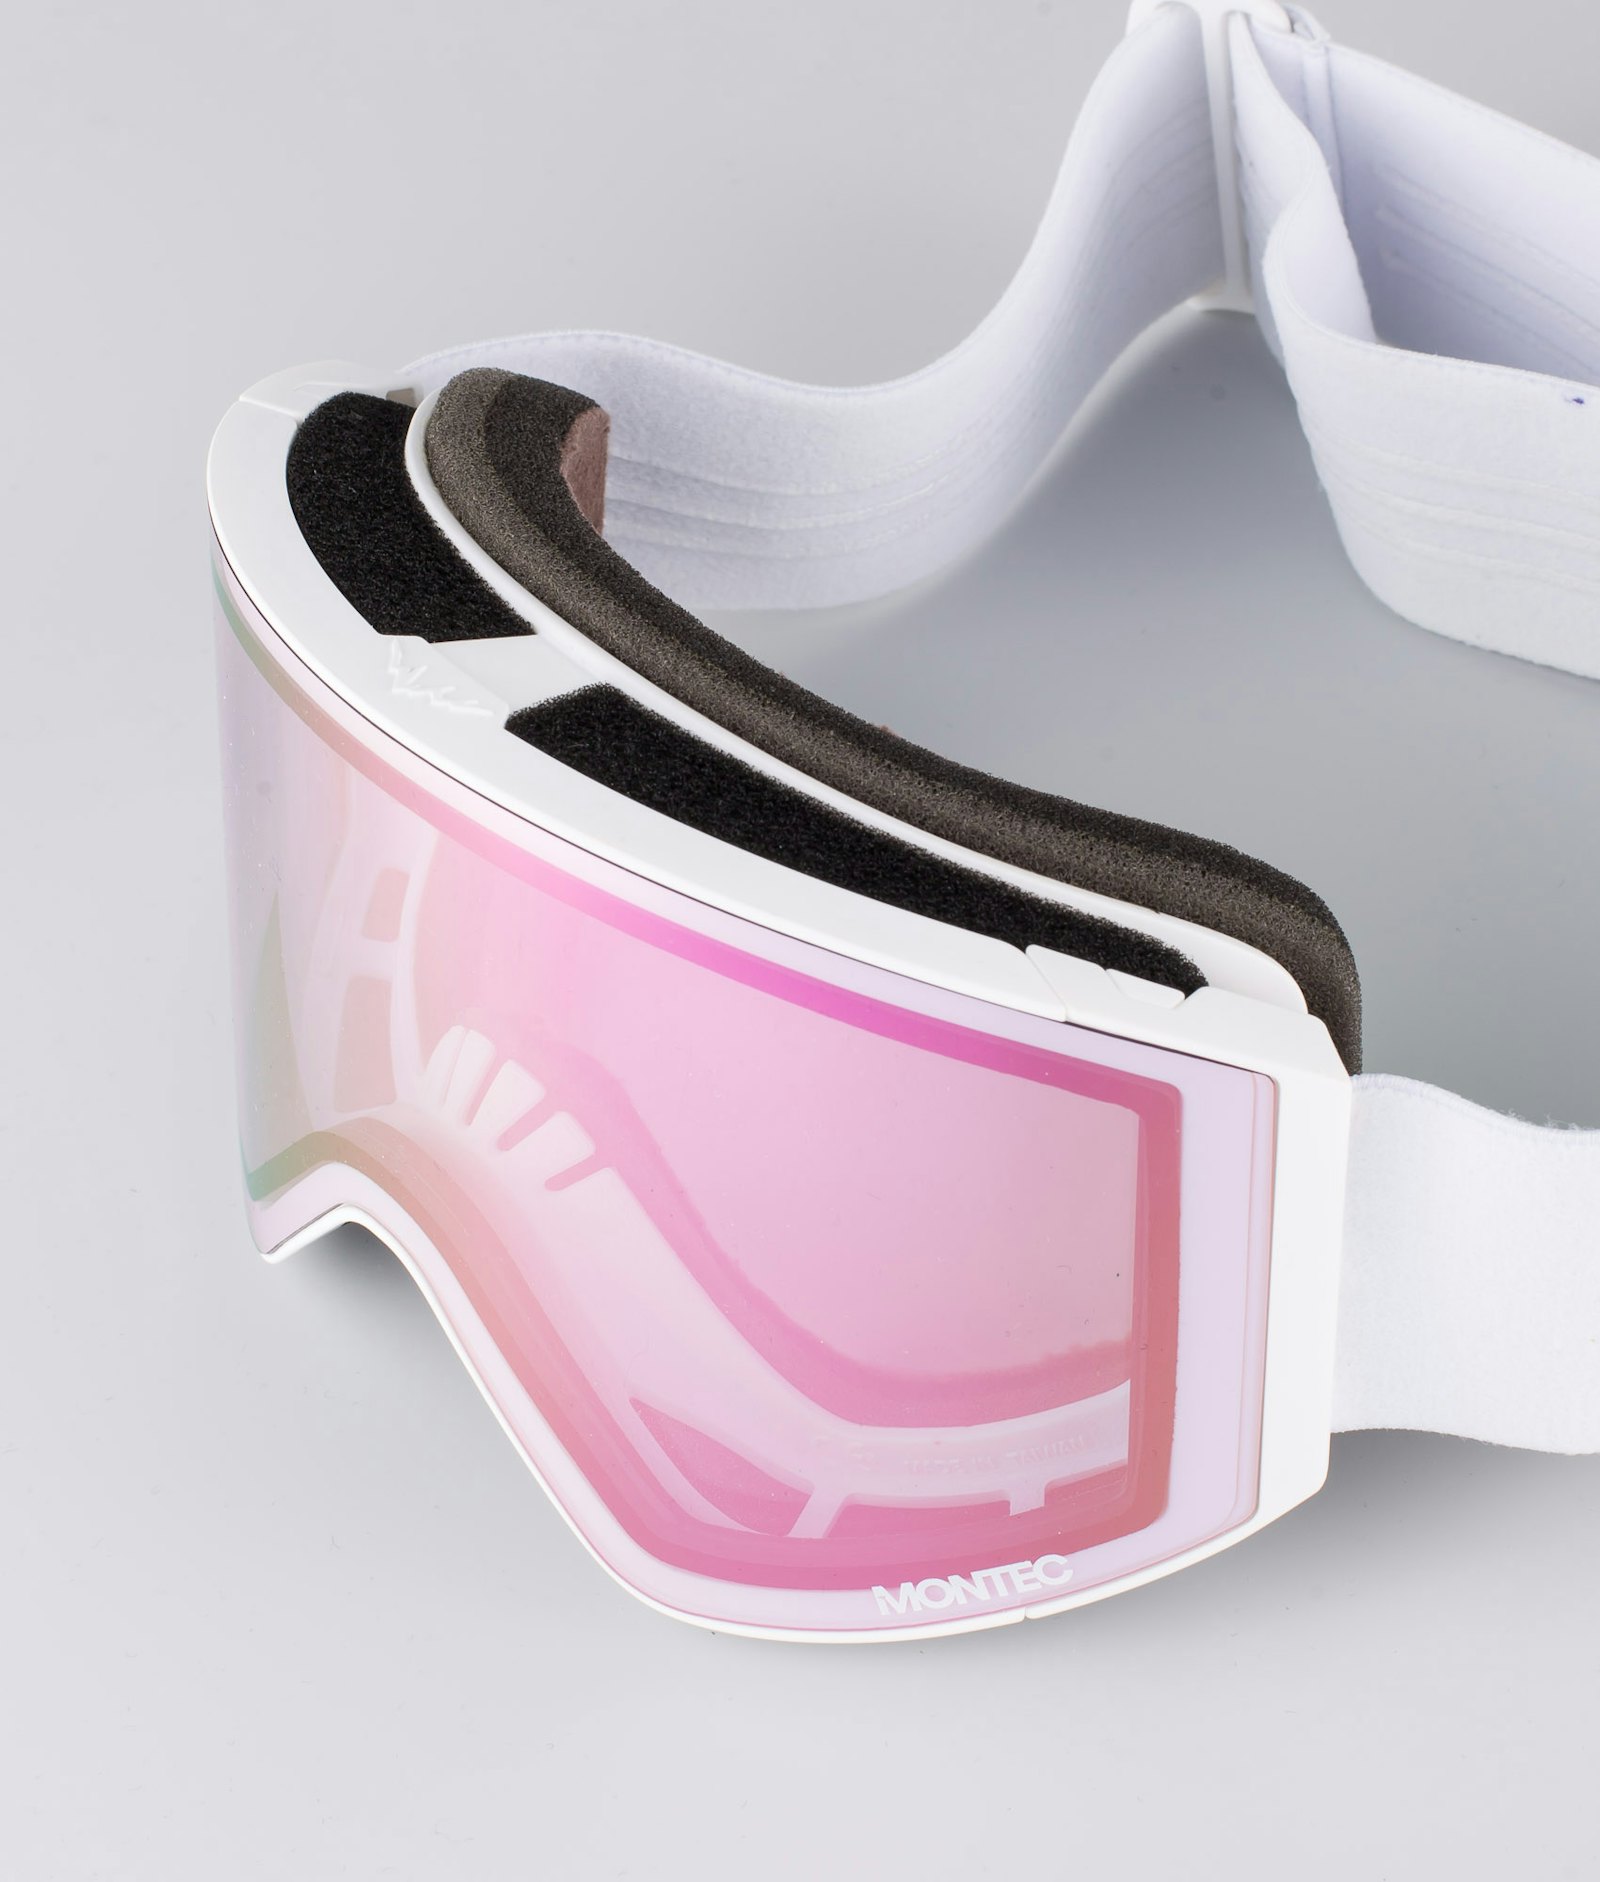 Scope 2020 Medium Masque de ski White/Pink Sapphire